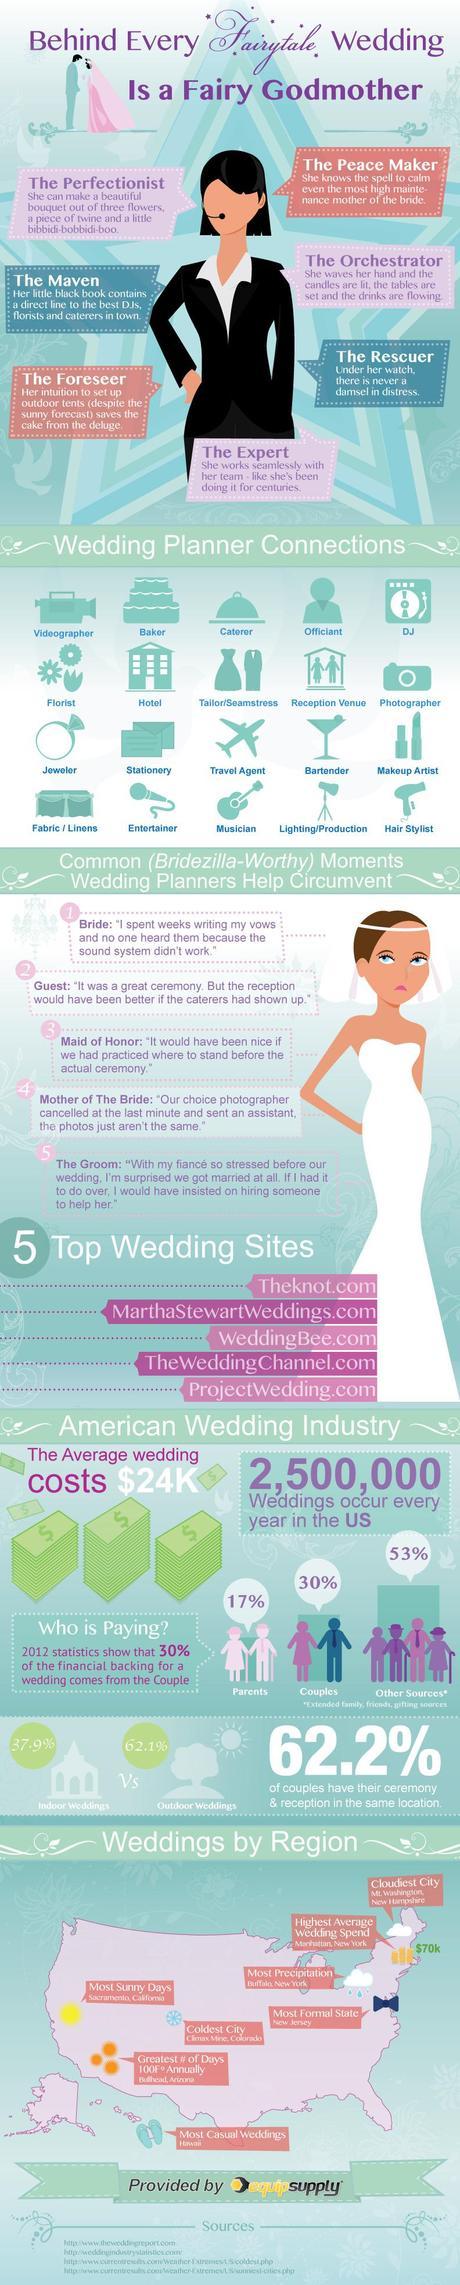 Infographic on Wedding Planning